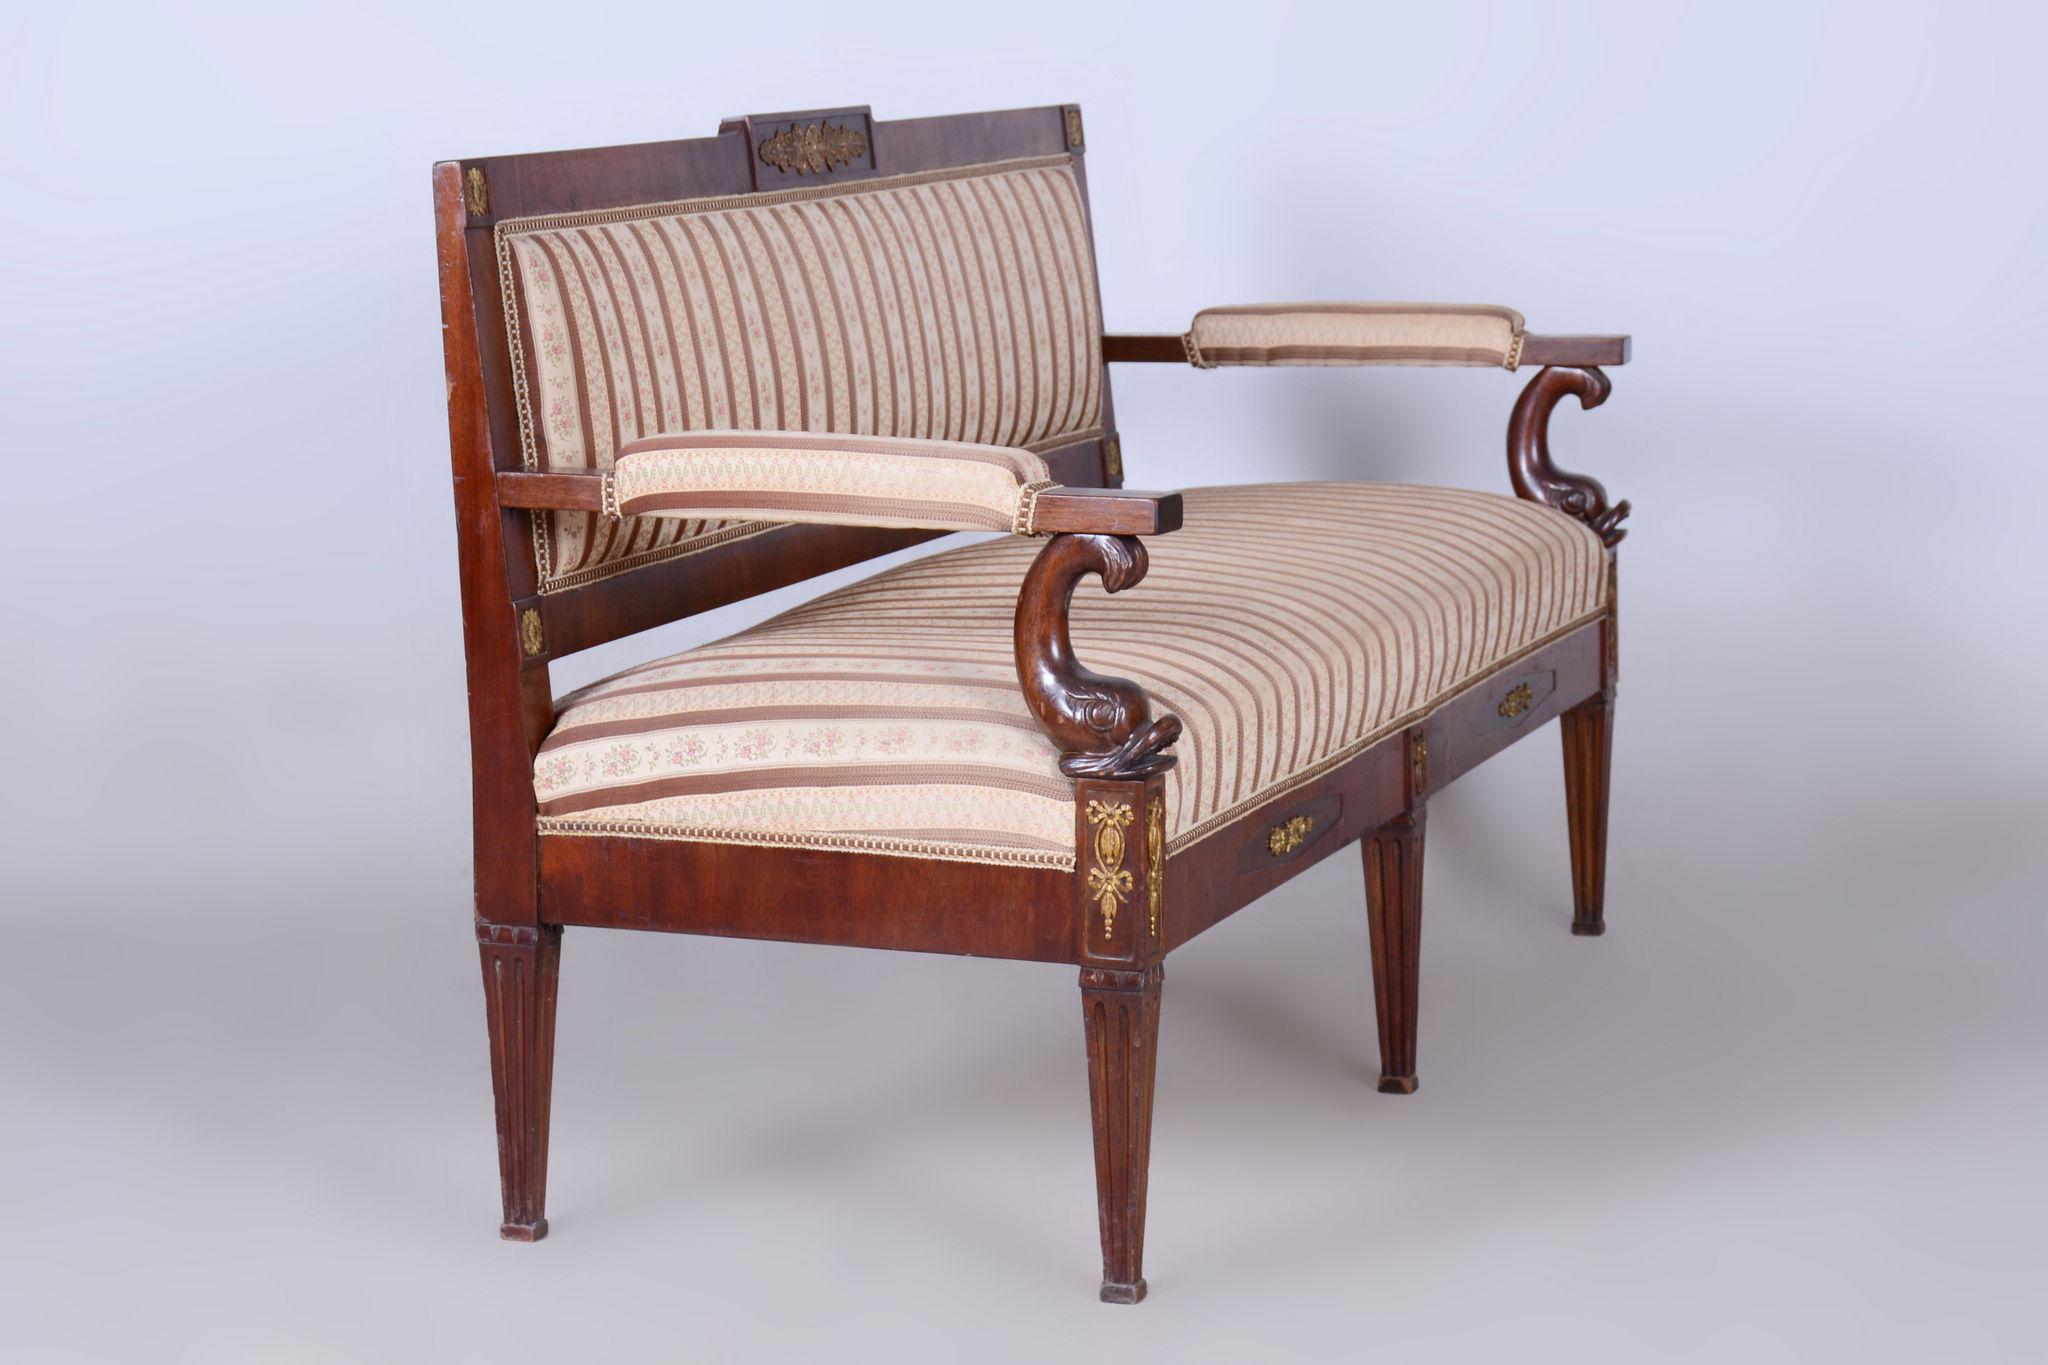 Empire Mahogany Sofa, Restored, Original Upholstery, France, 1860s For Sale 8